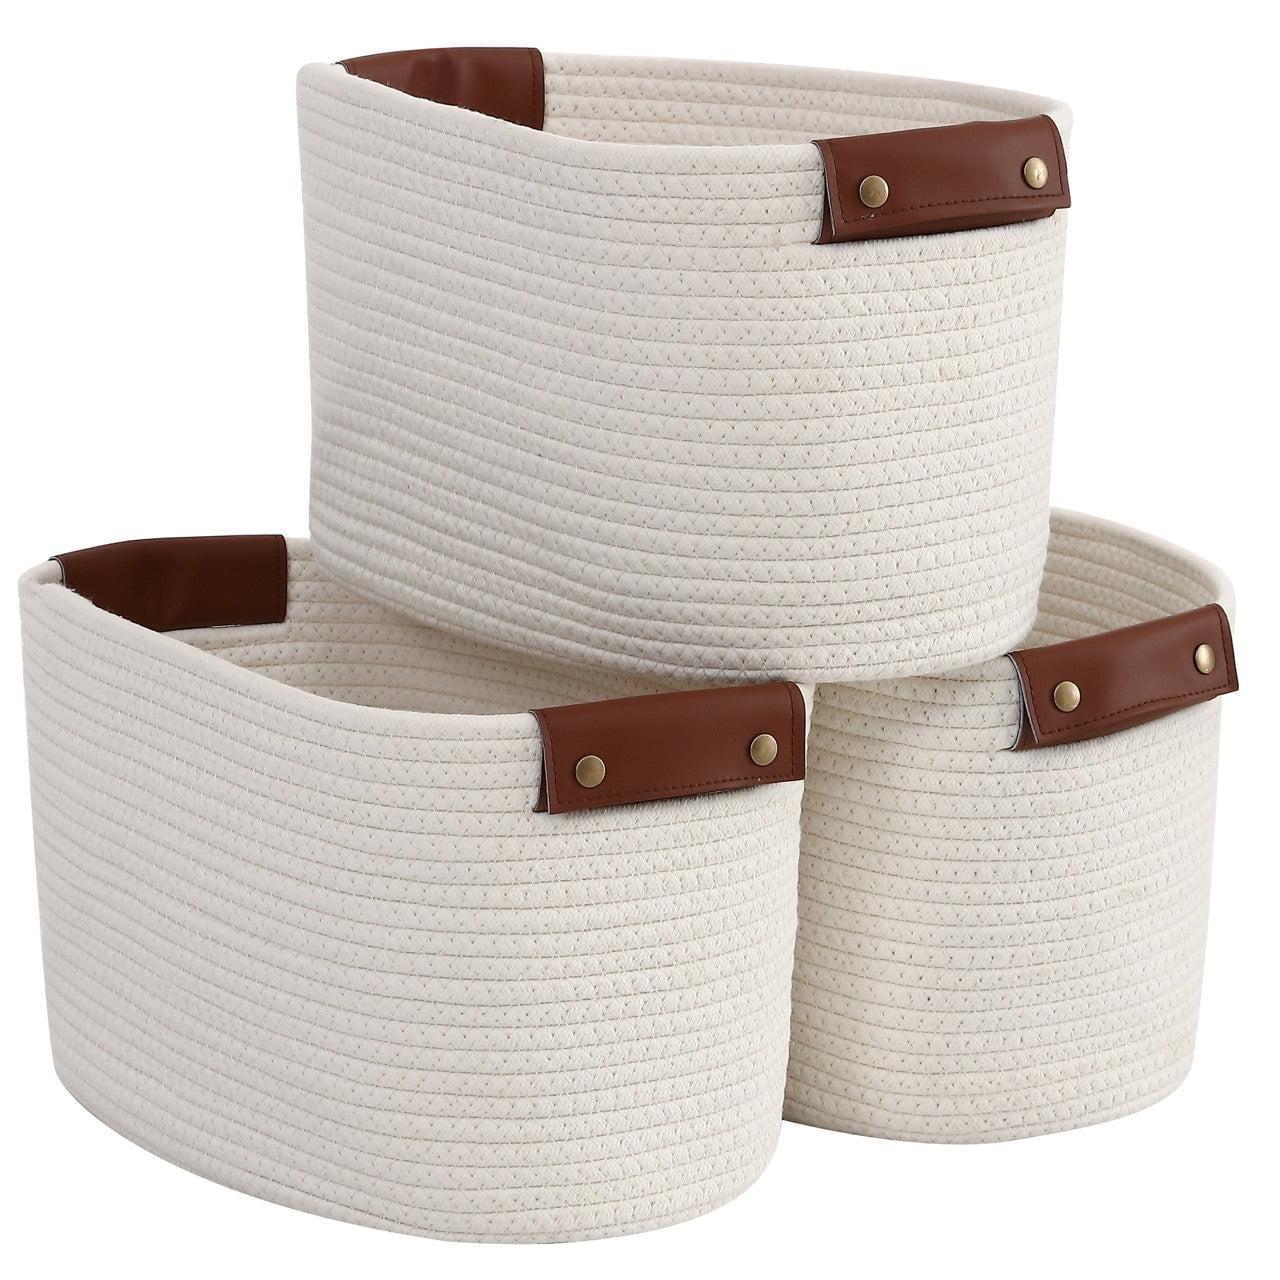 Cream Cotton Woven Round Storage Basket with Leather Handles